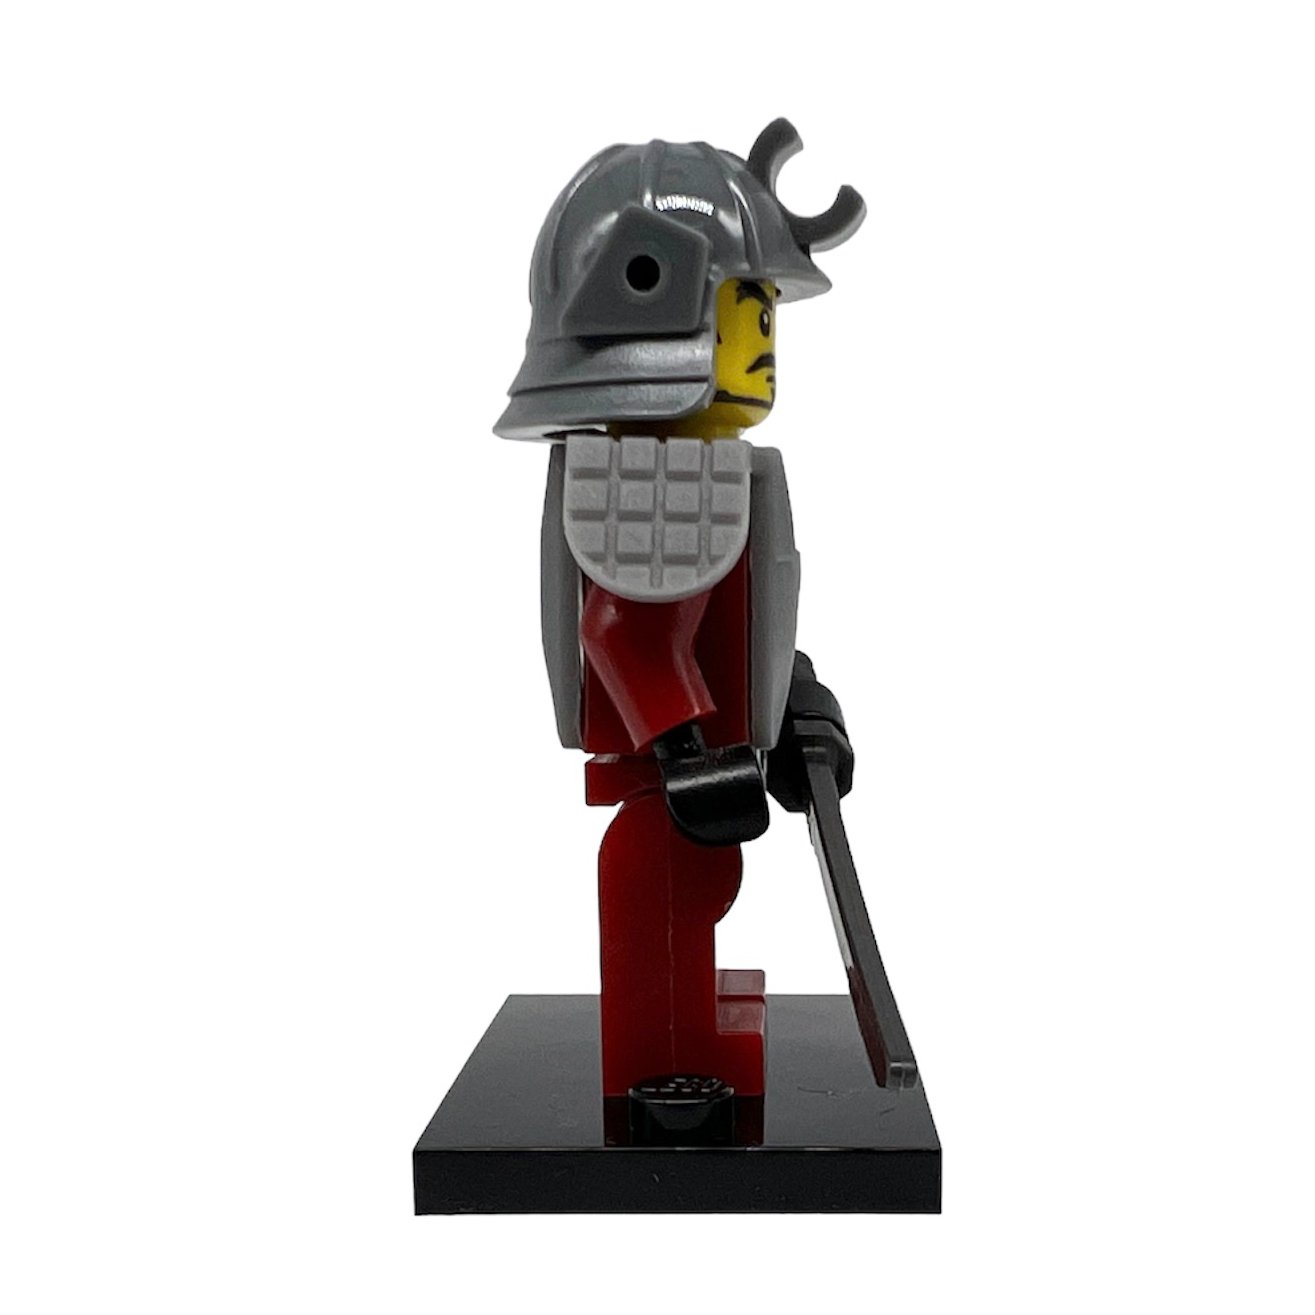  LEGO - Minifigures Series 3 - Samurai Warrior : Toys & Games